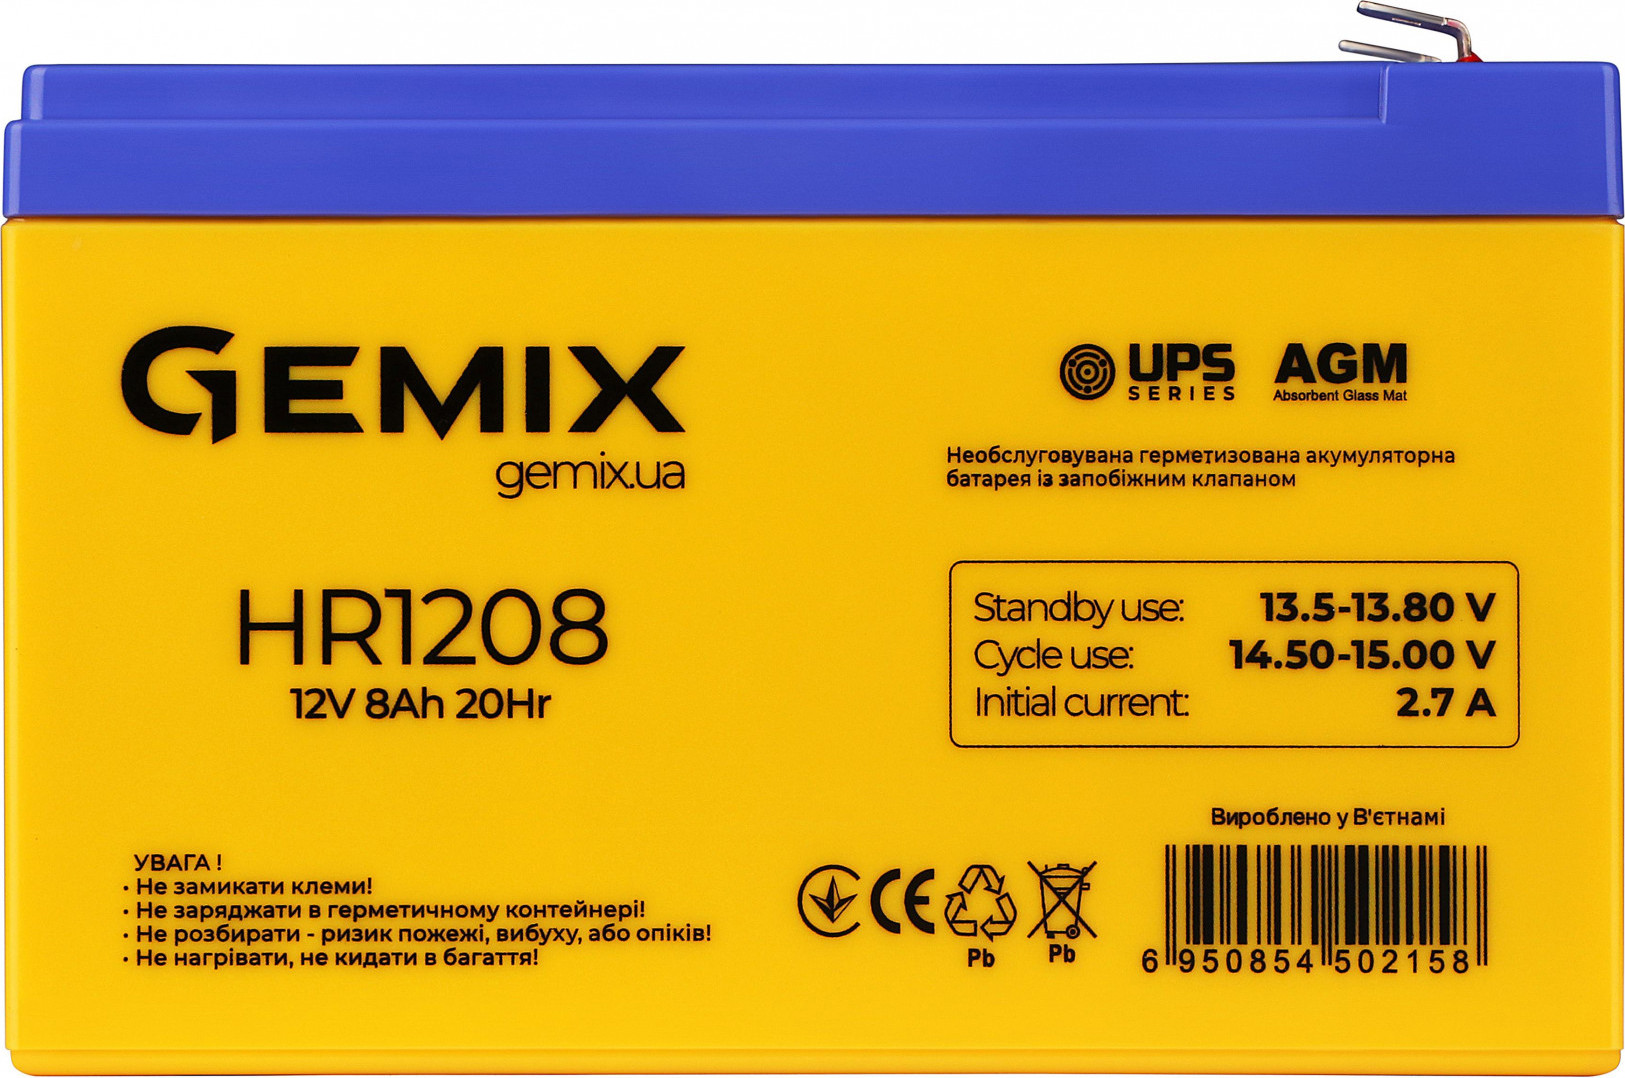 Gemix HR1208 - зображення 1